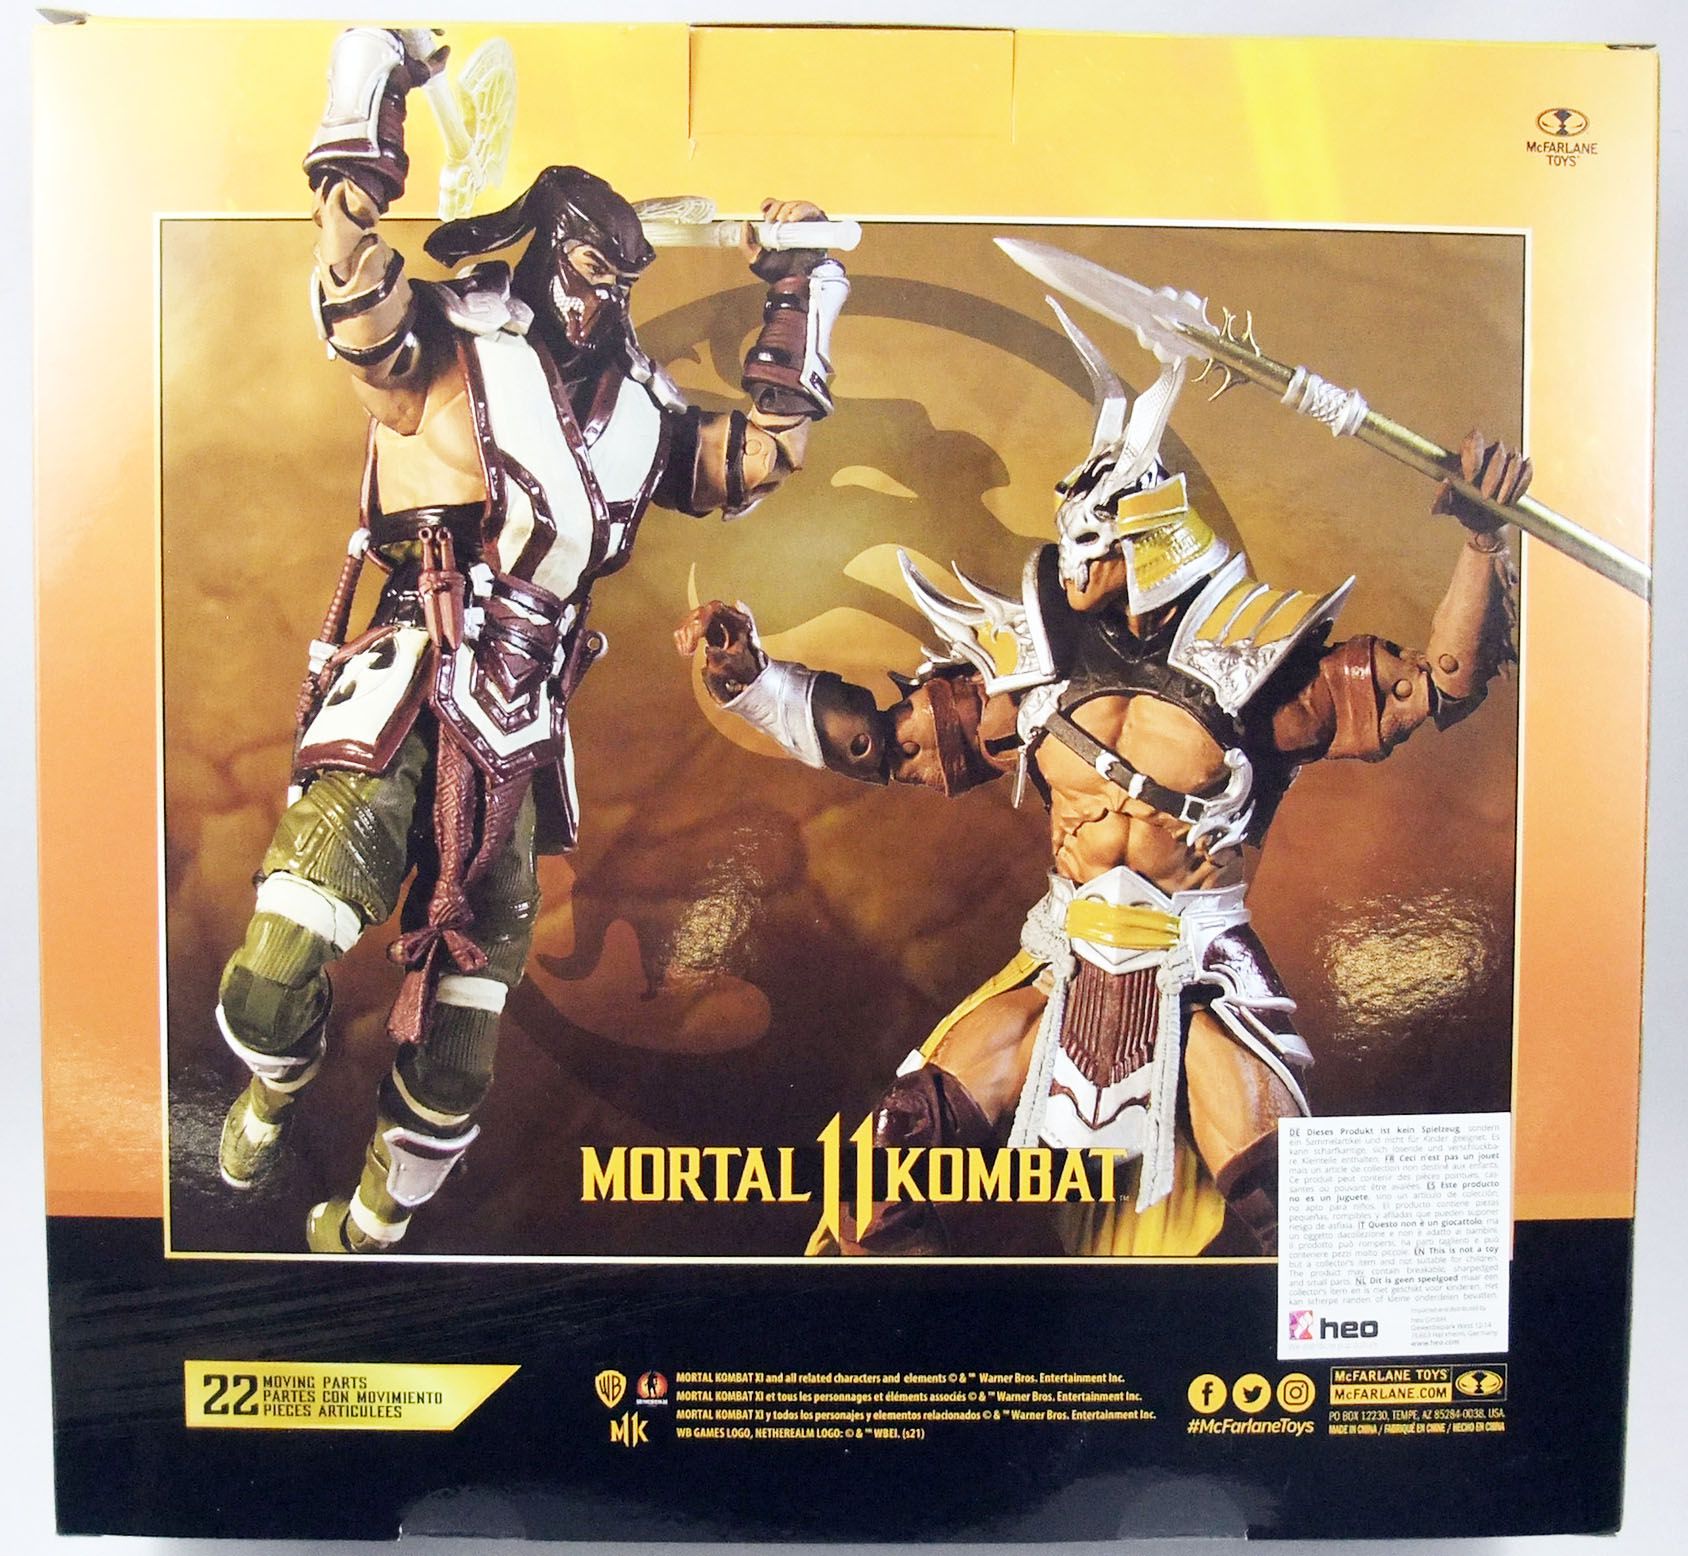 McFarlane Toys Mortal Kombat 11 Shao Kahn Figure Revealed?!?